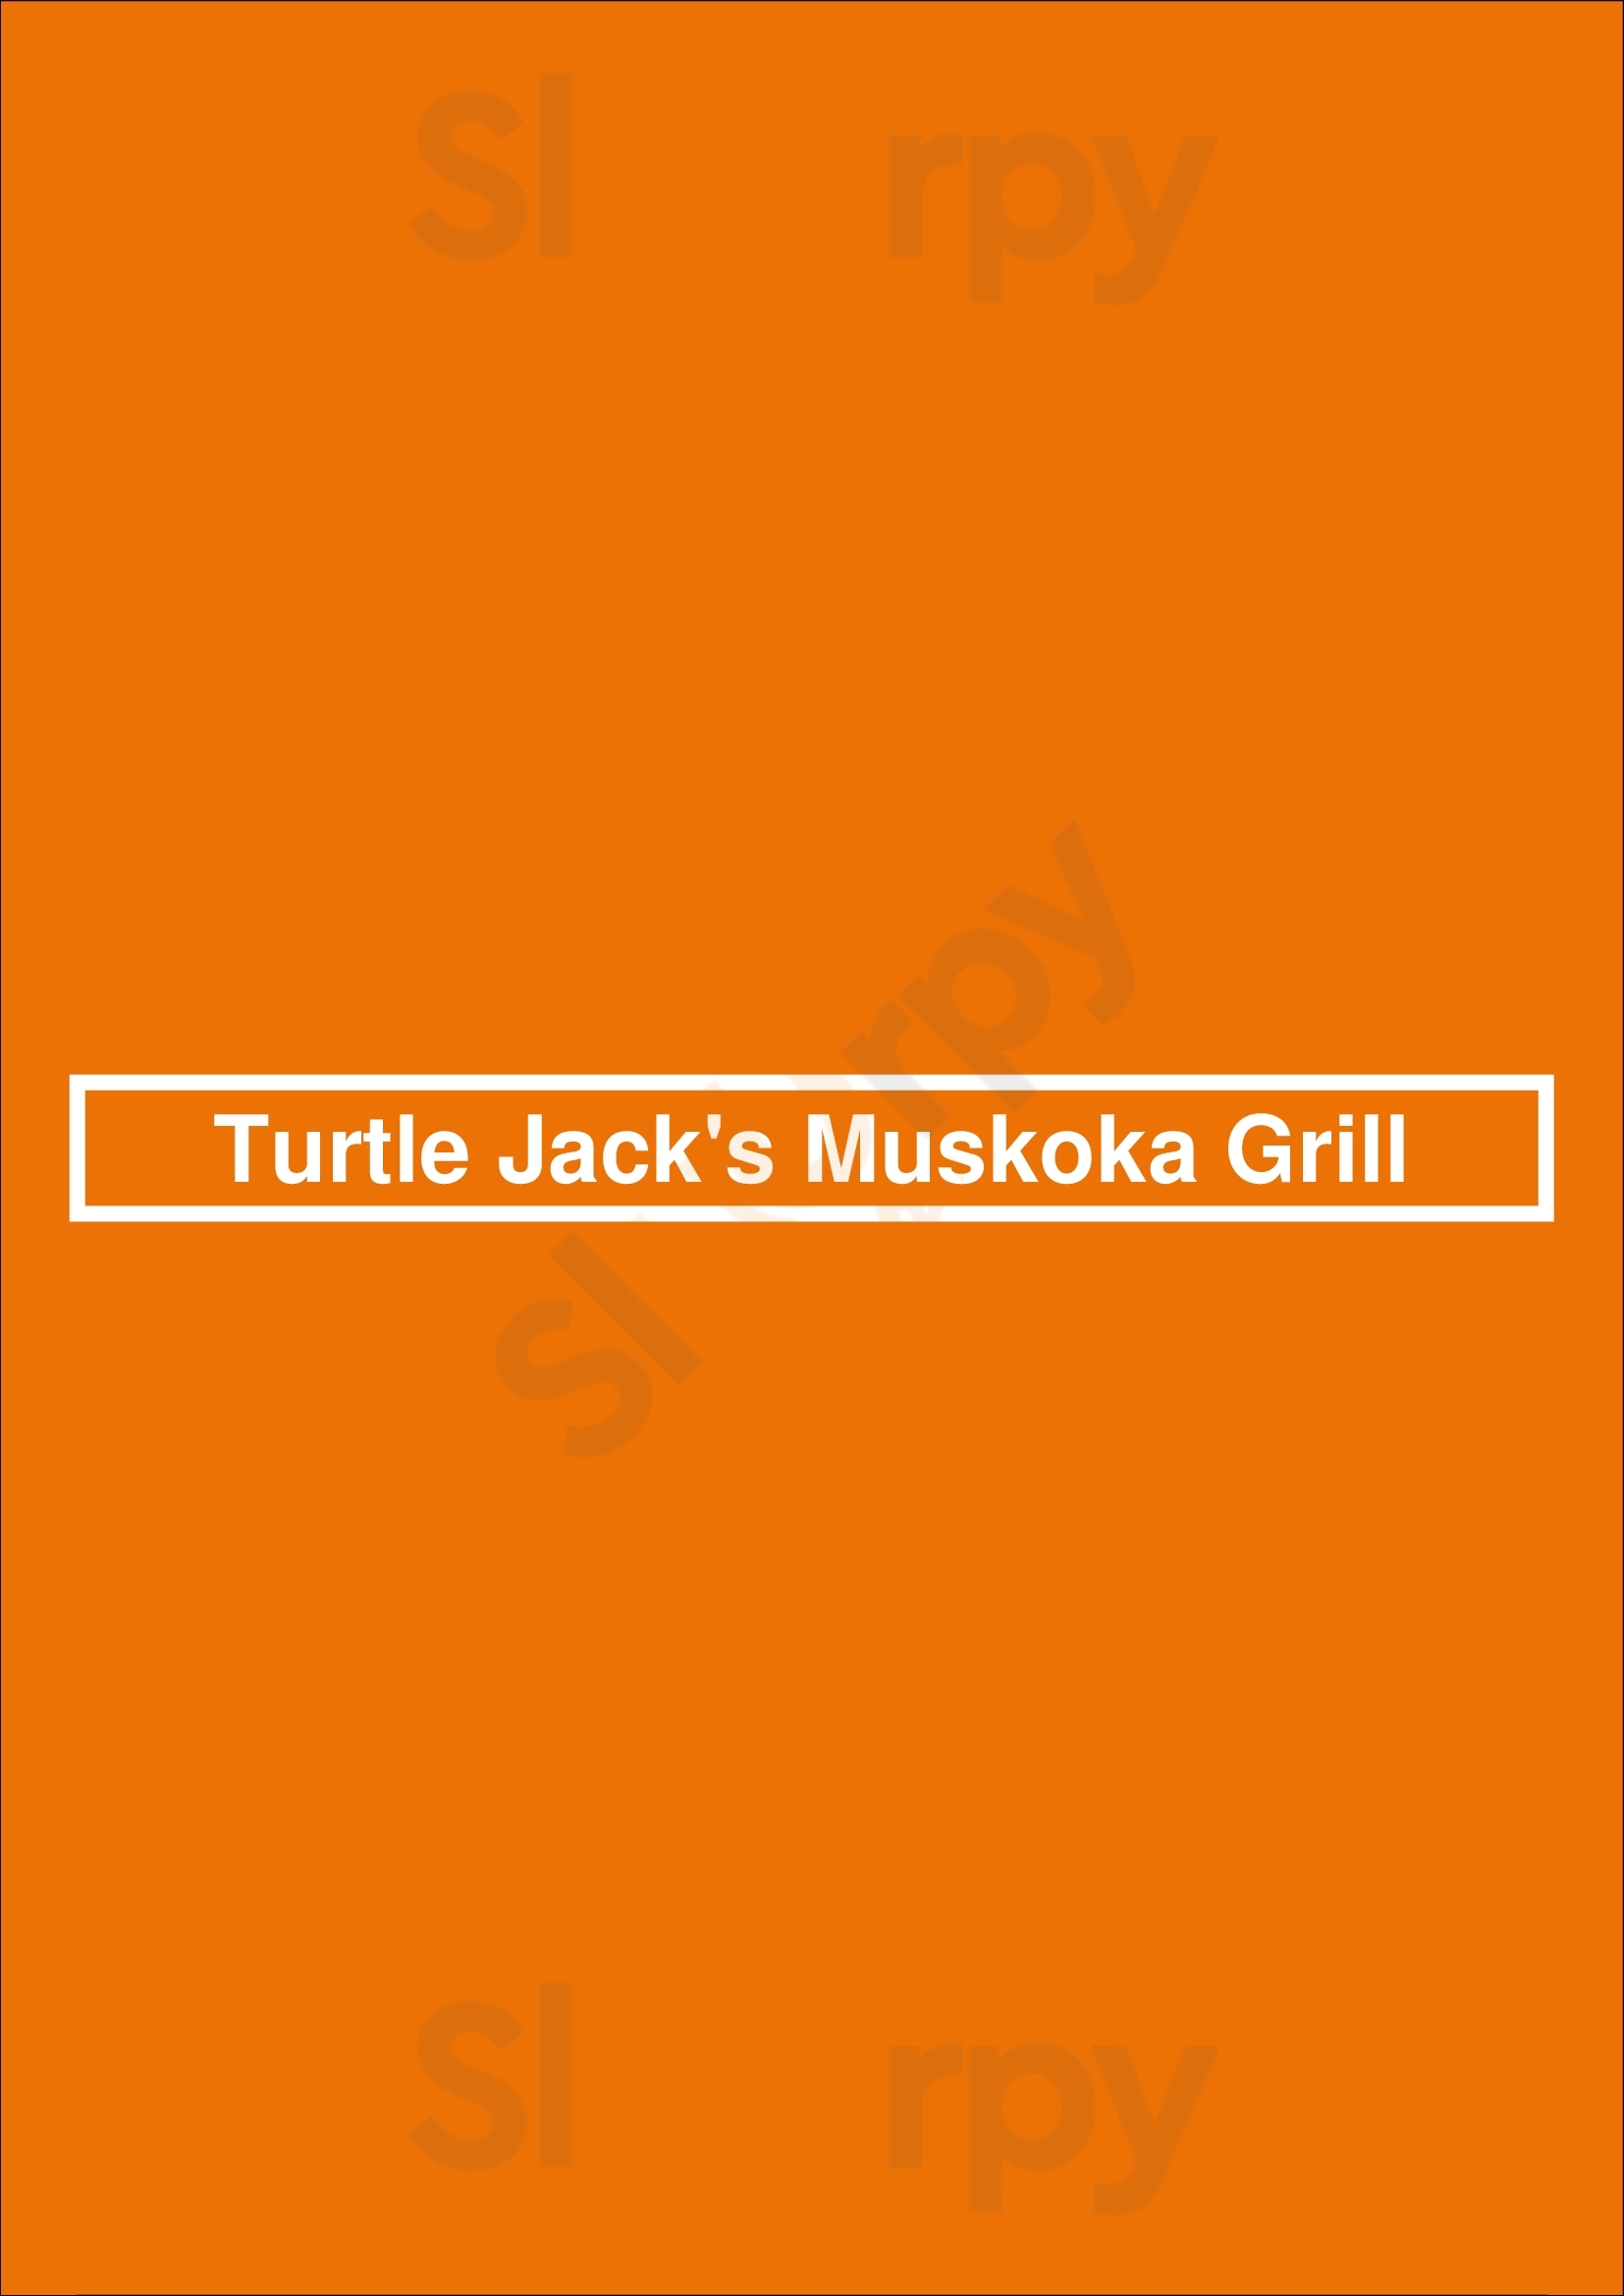 Turtle Jack's Upper James Hamilton Menu - 1